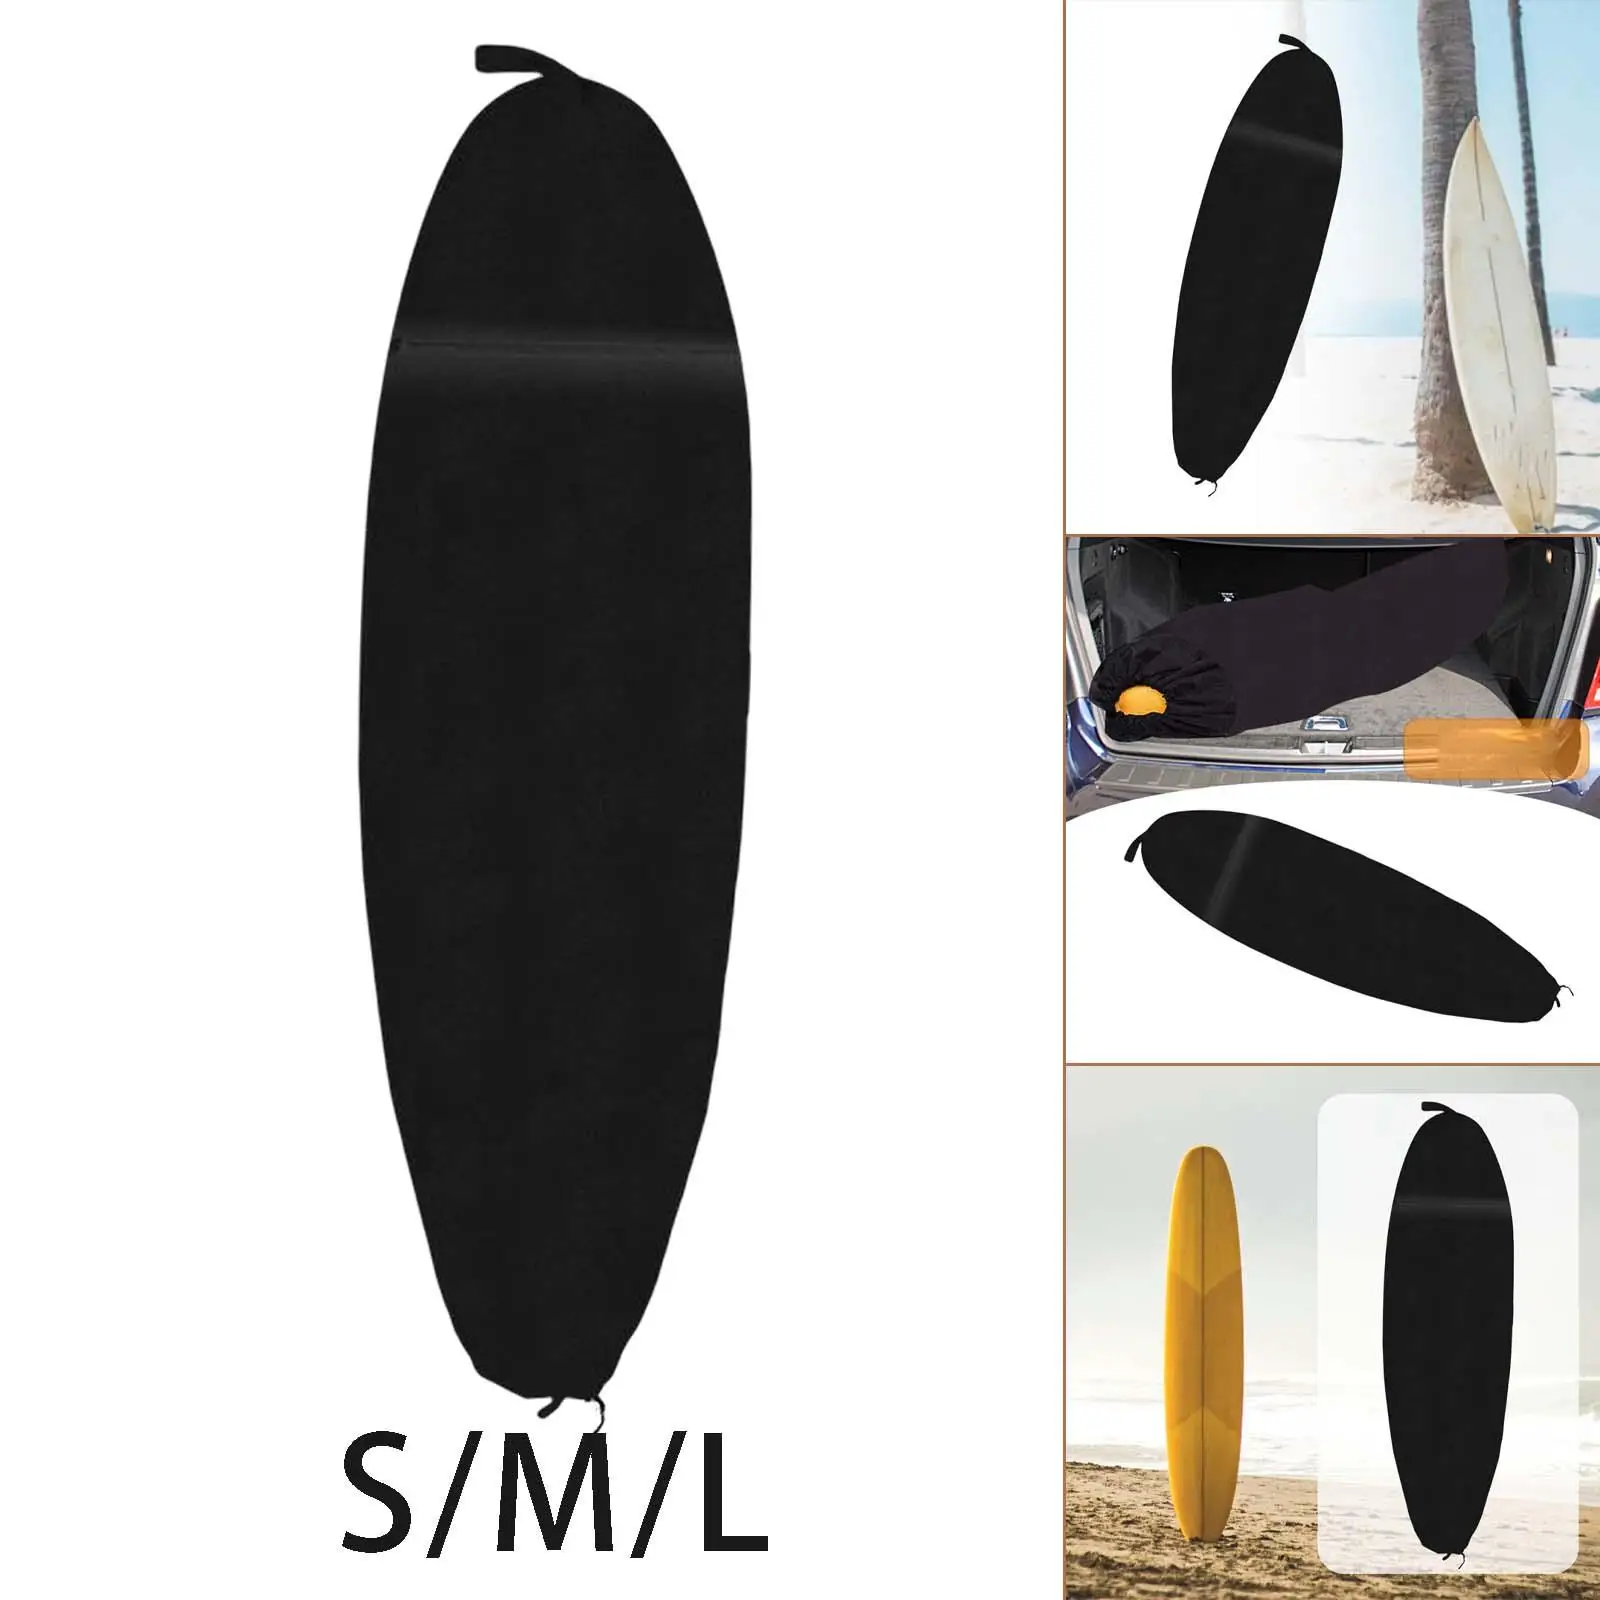 Elastic Surfboard Sock Cover Storage Light Protective Bag Carrying Dustproof Case Lightweight for Your Surf Board Shortboard